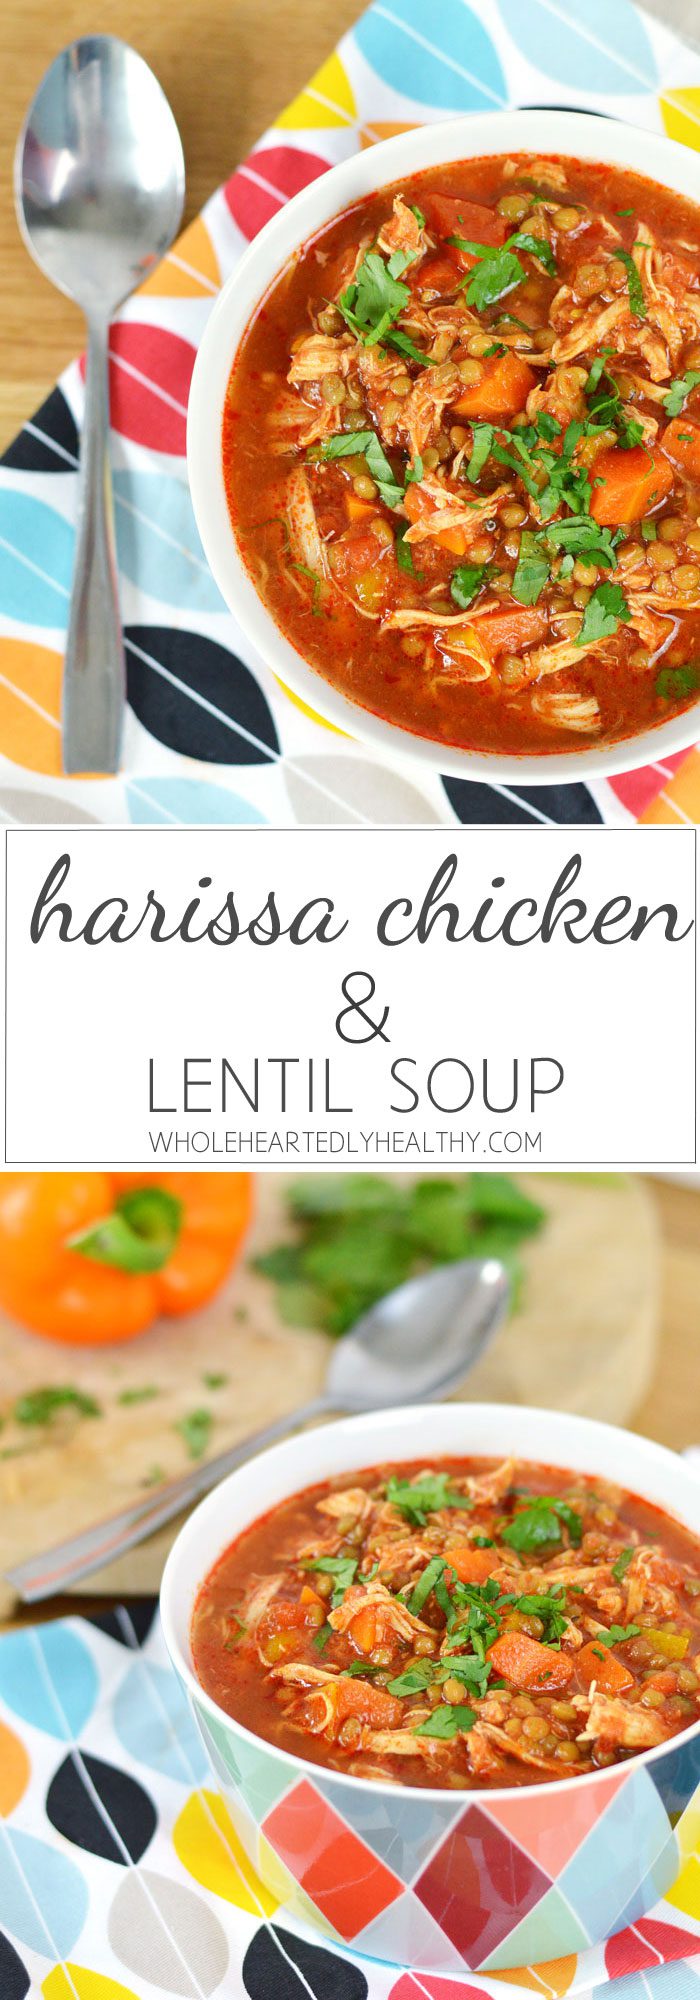 Harissa chicken and lentil soup recipe